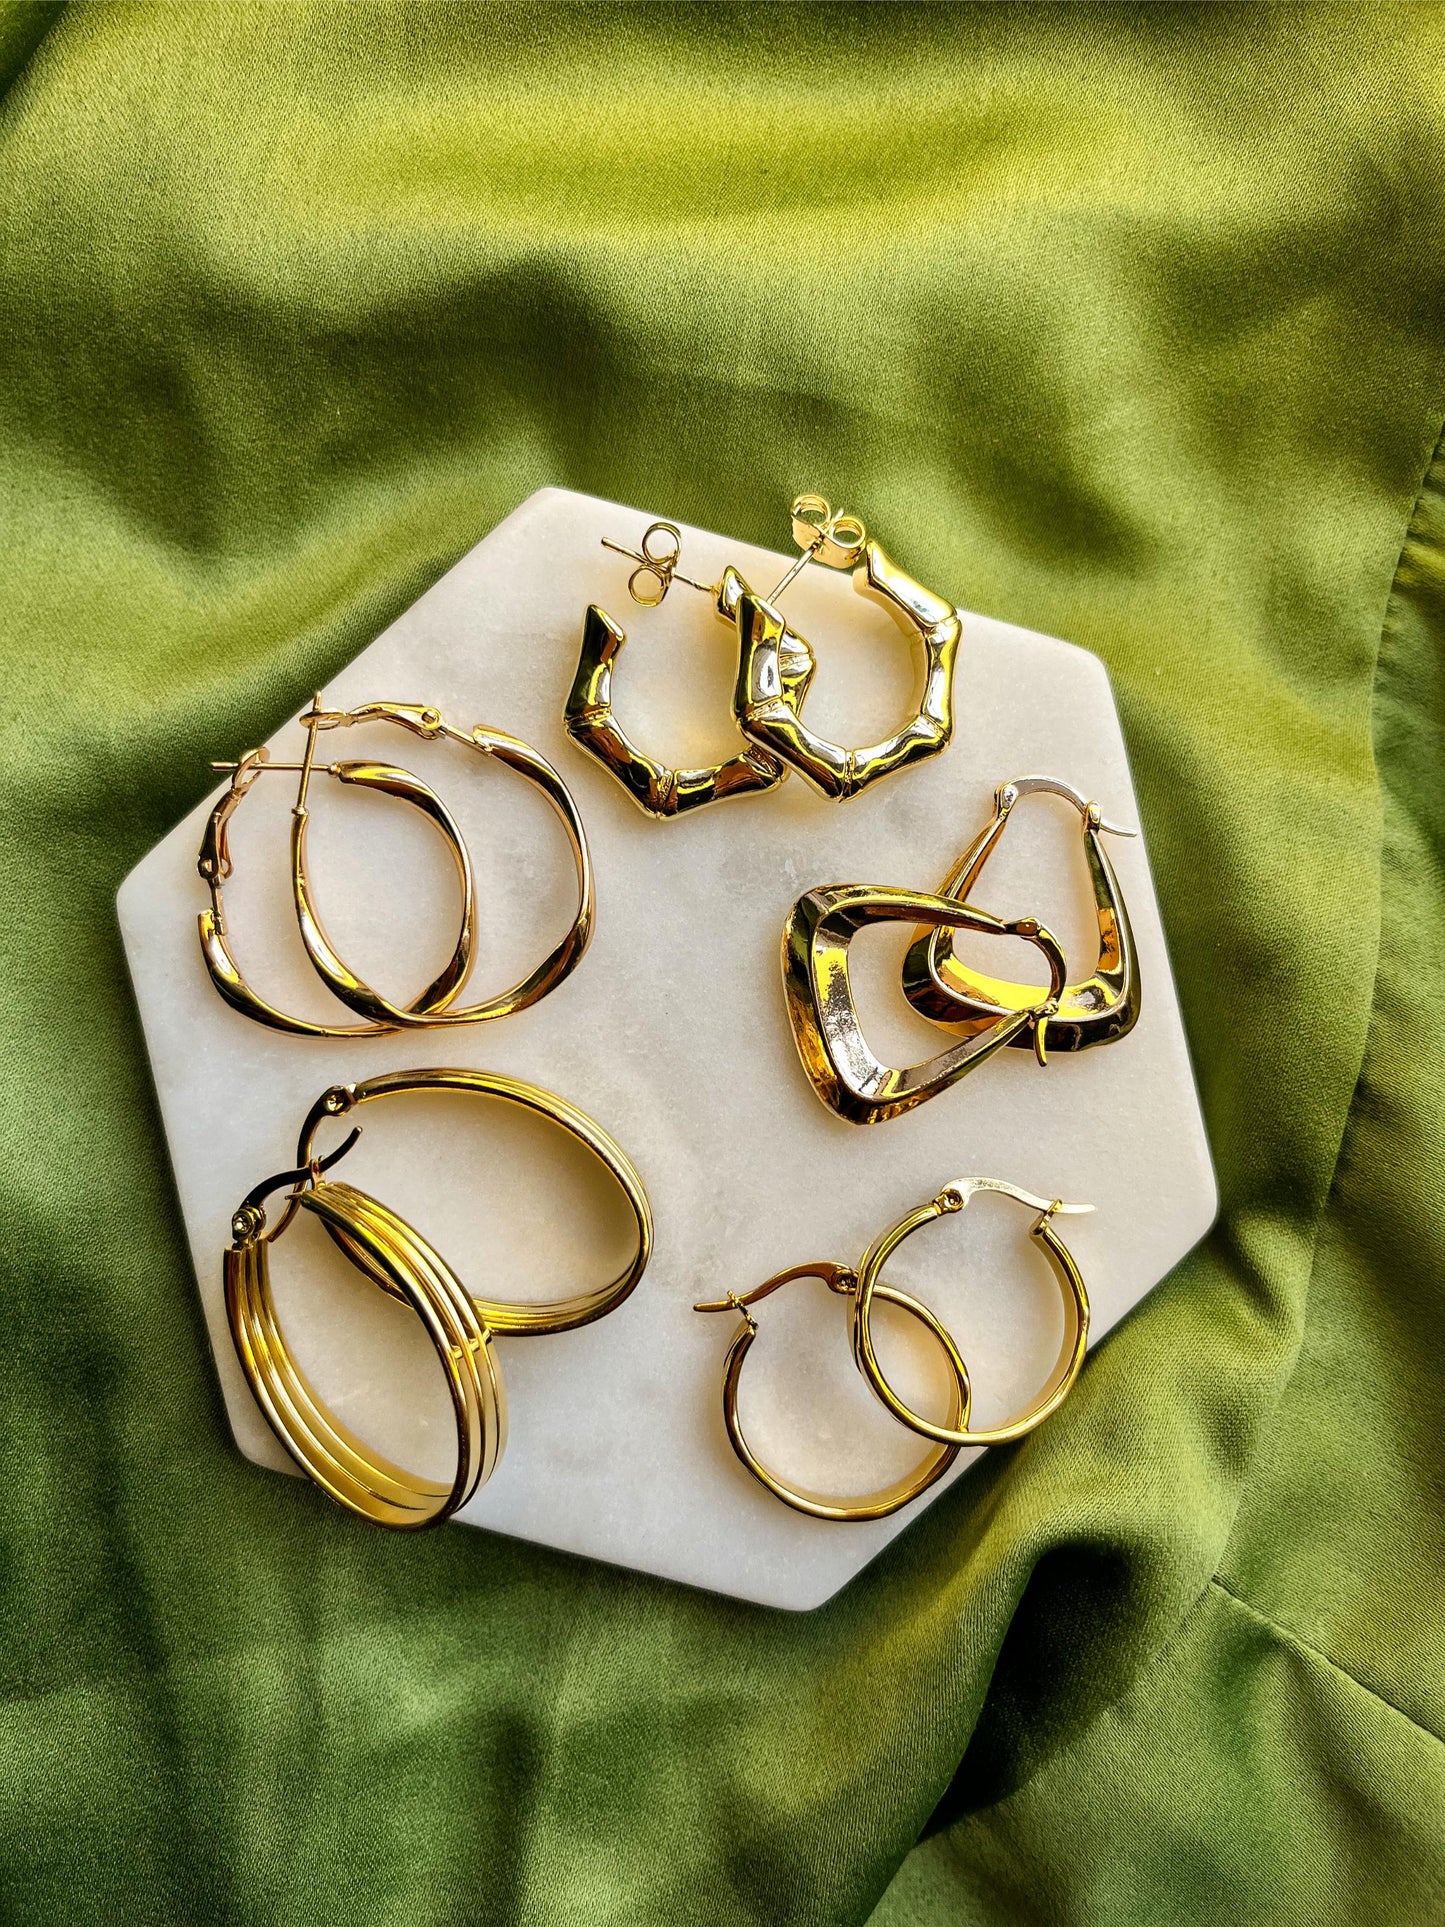 18K Gold Plated Pentagon Hoop Earrings For Women